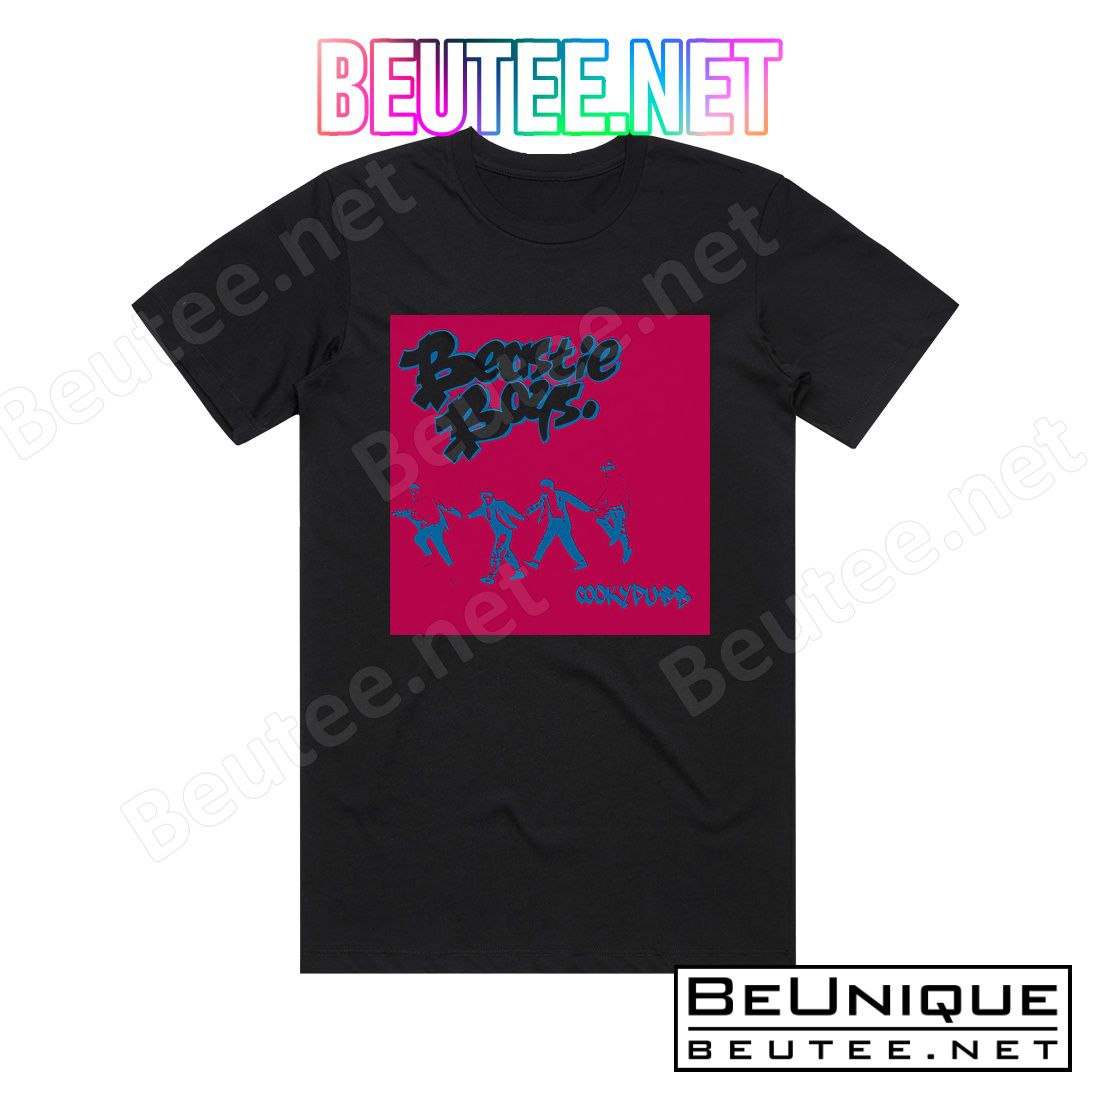 Beastie Boys Cooky Puss Album Cover T-Shirt